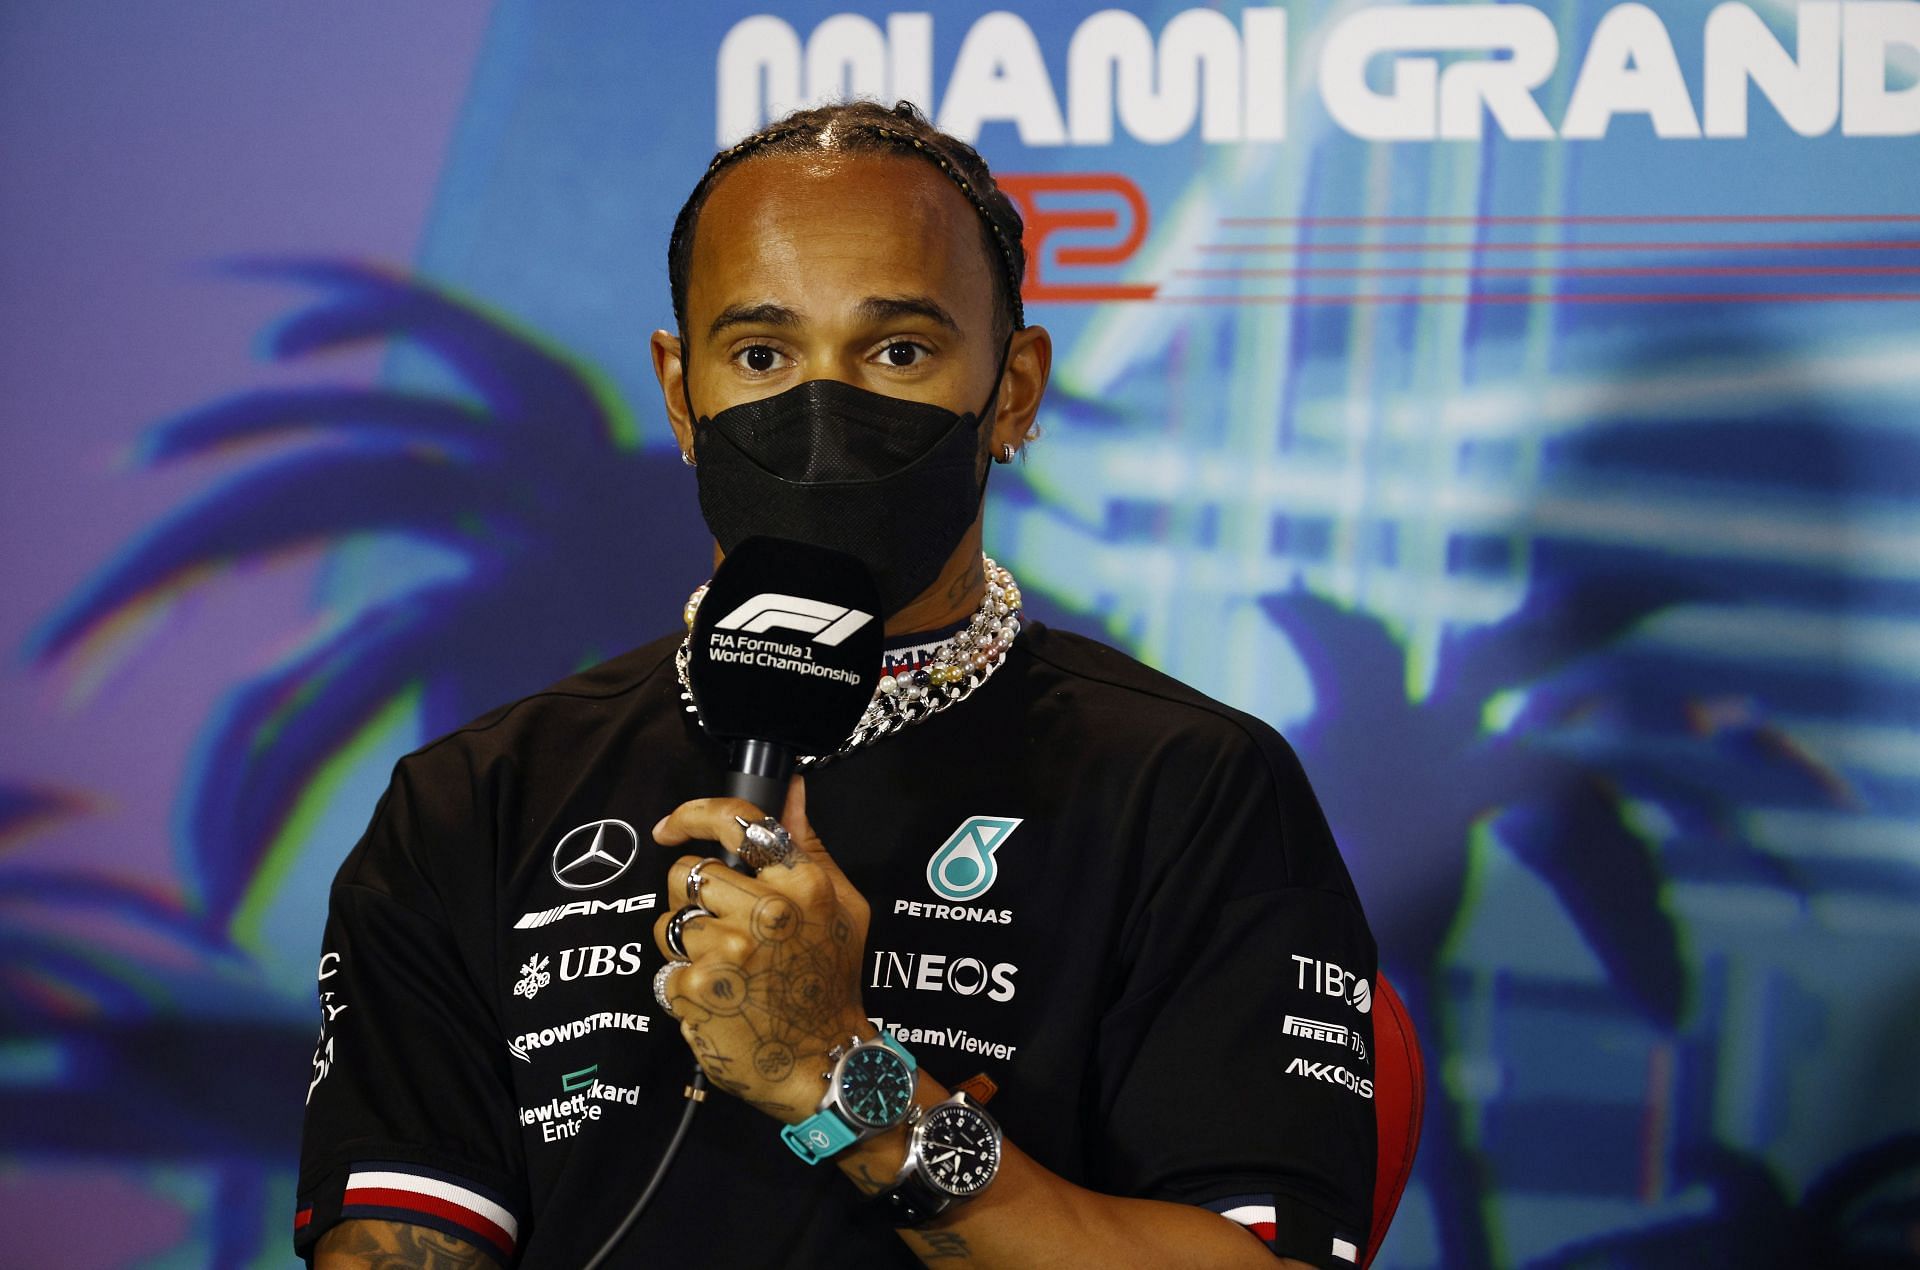 Lewis Hamilton at the F1 Grand Prix of Miami - Practice